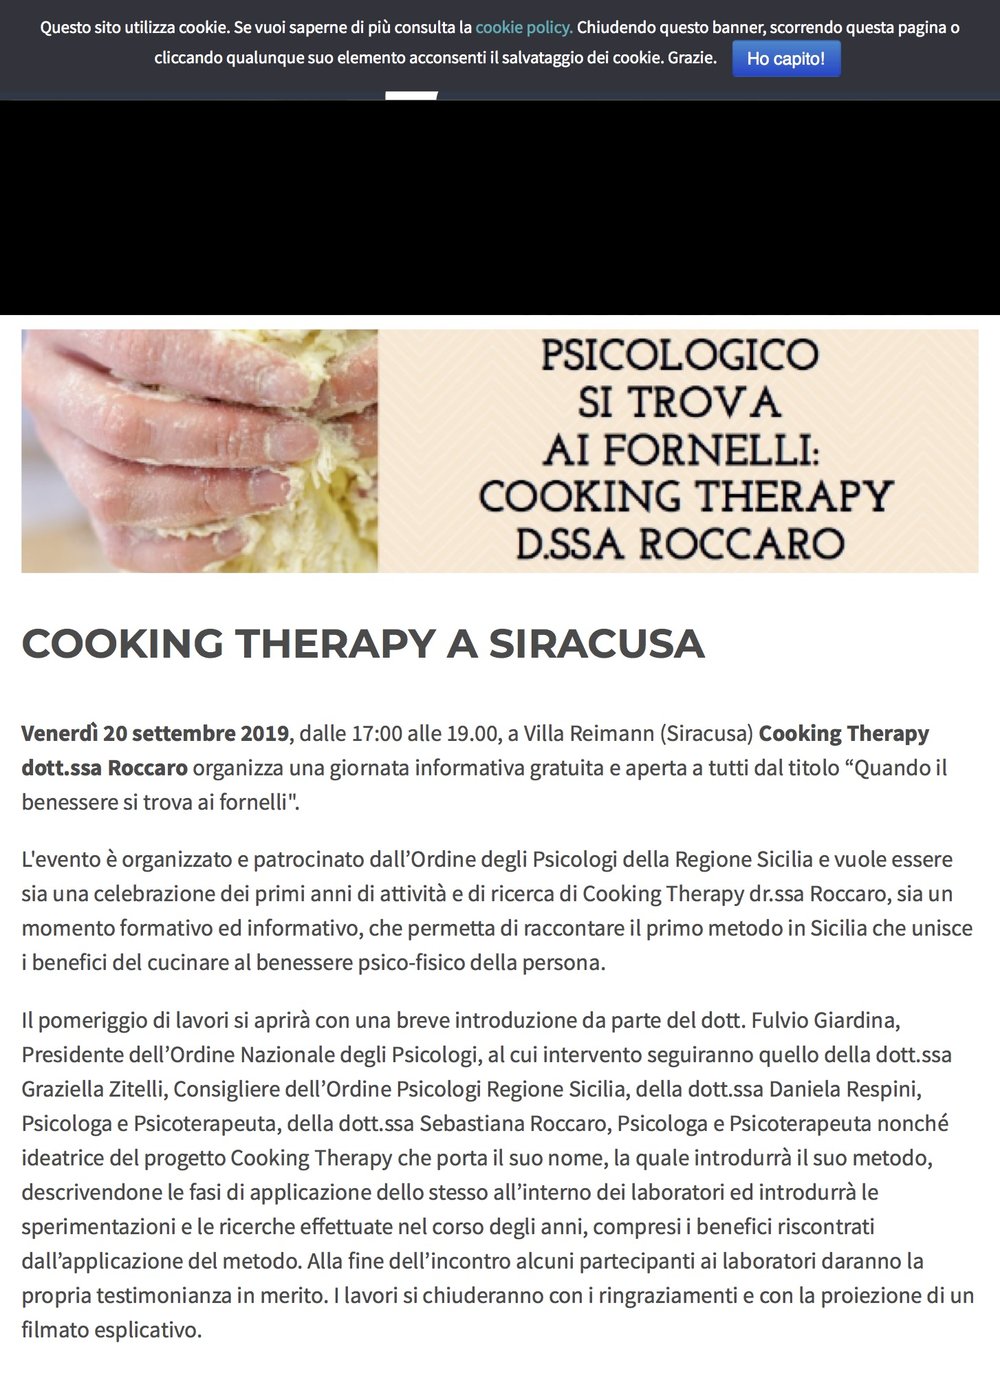 Cooking Therapy a Siracusa - PeriPeri Catania copia.jpg